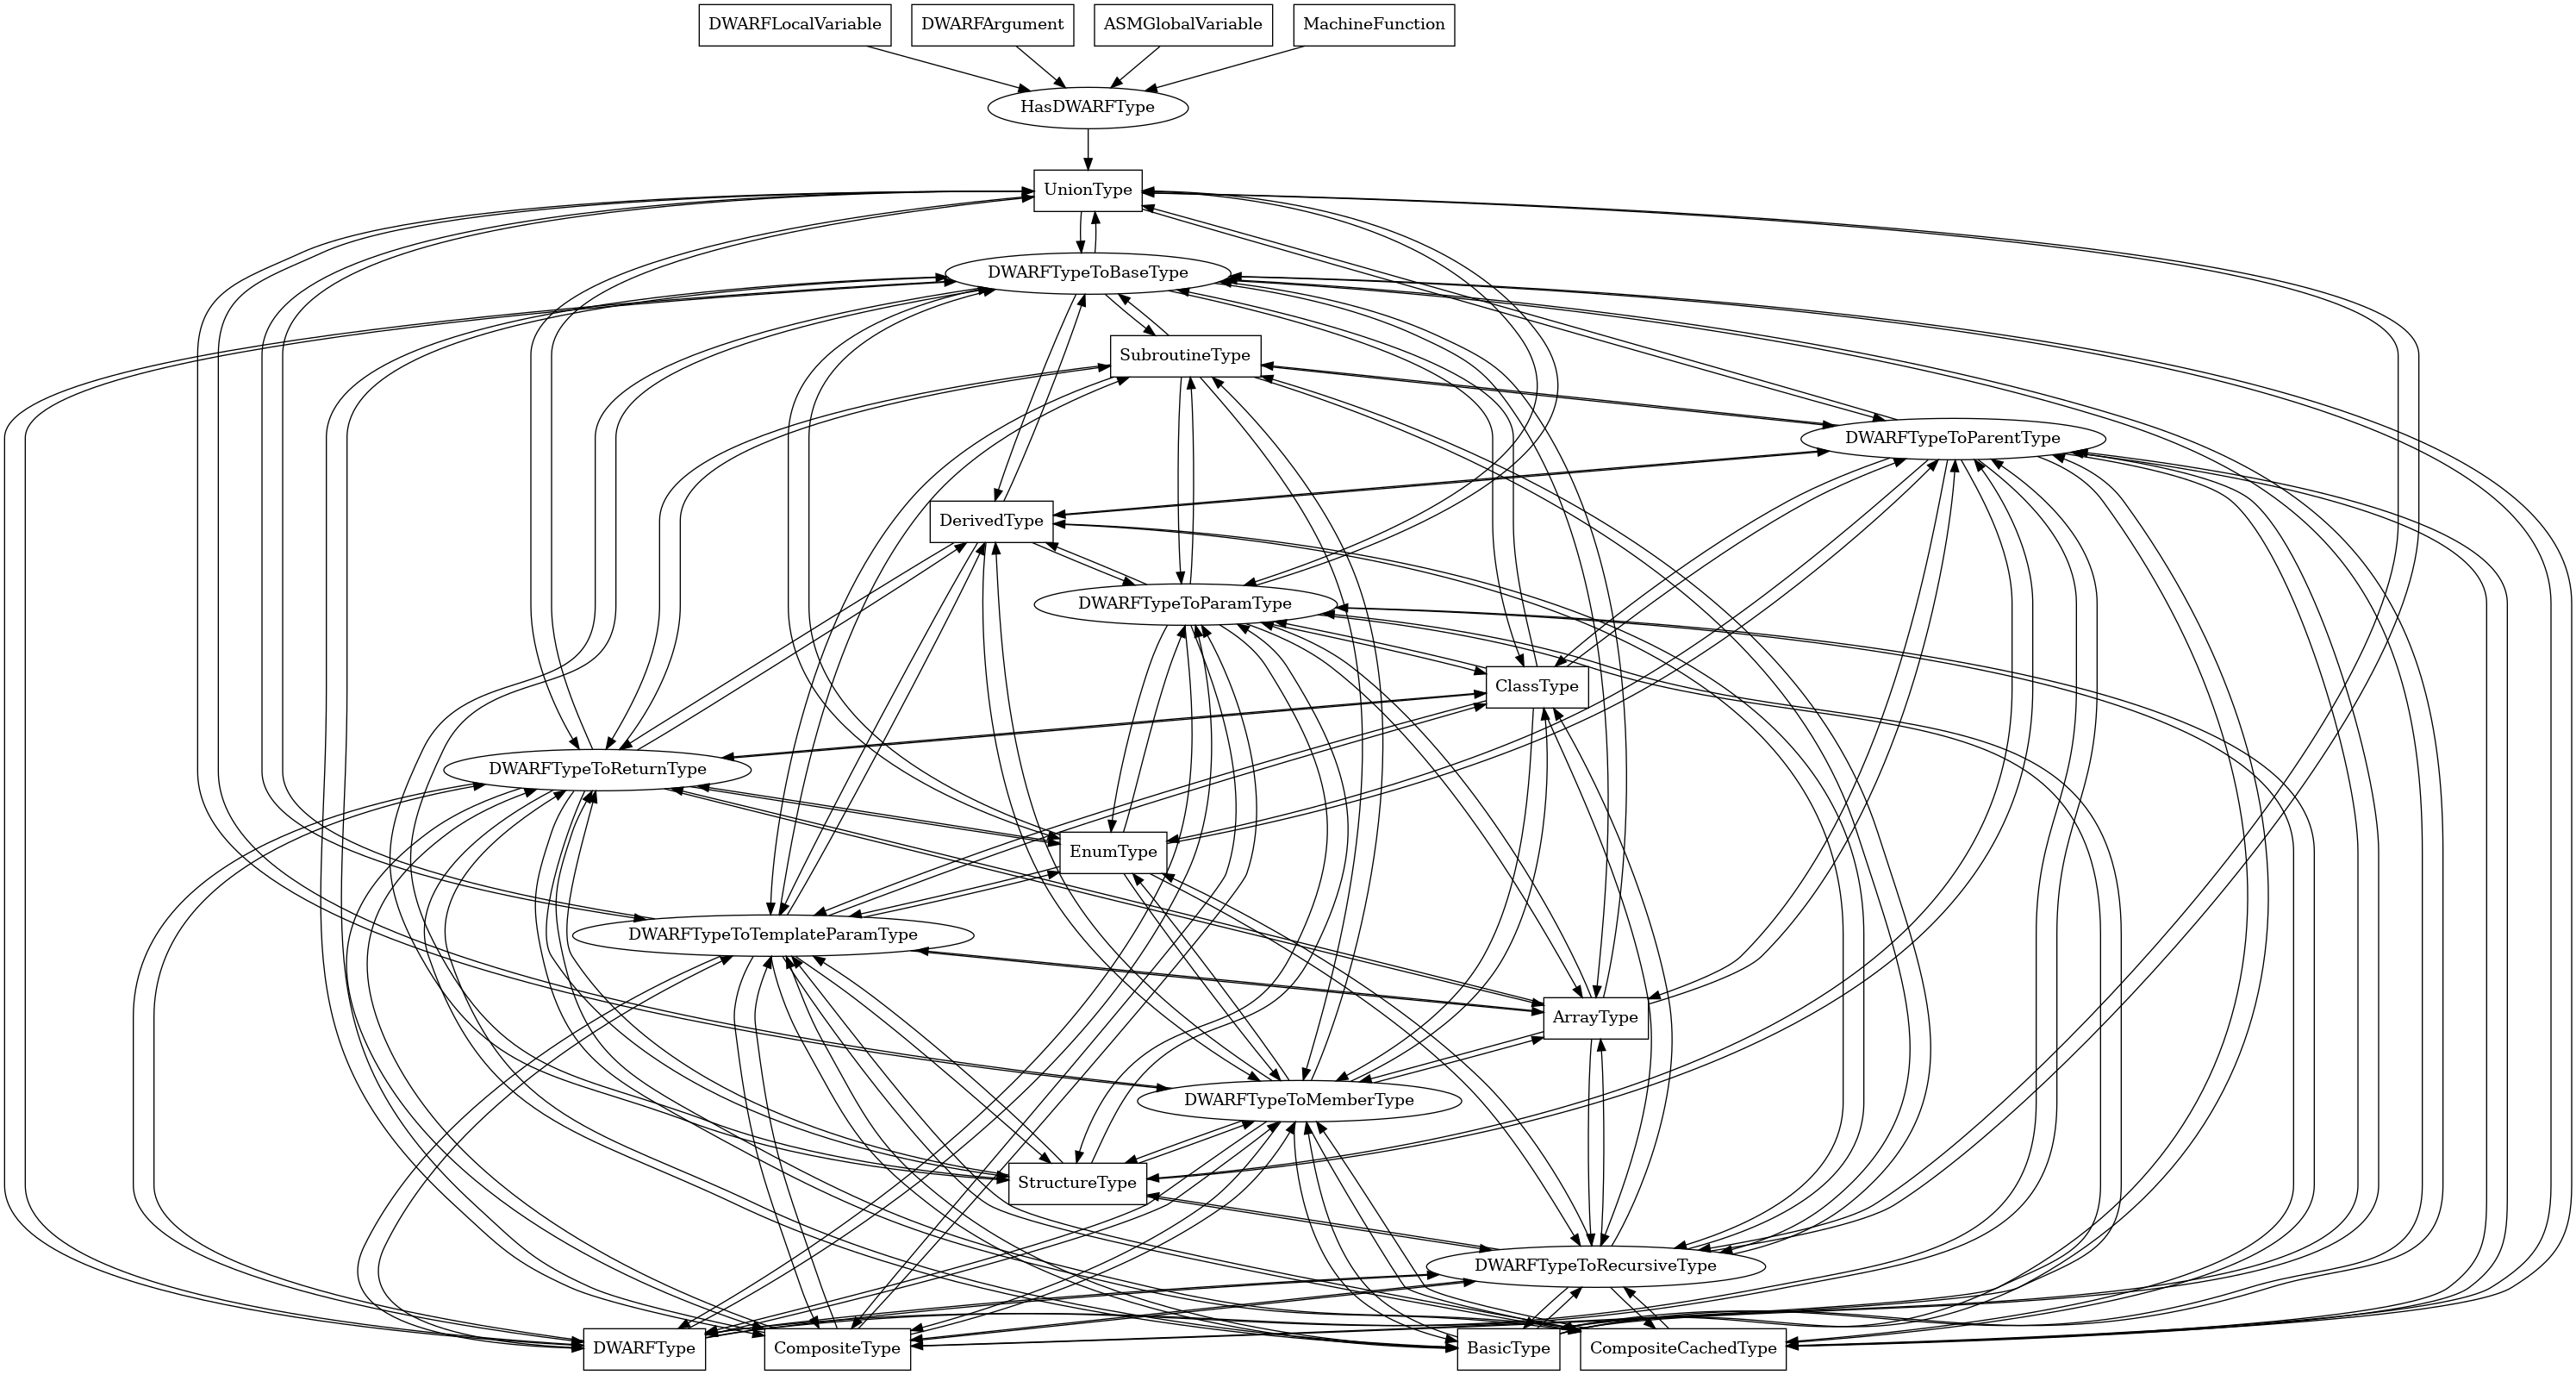 Entity-relationship diagram for UnionType nodes